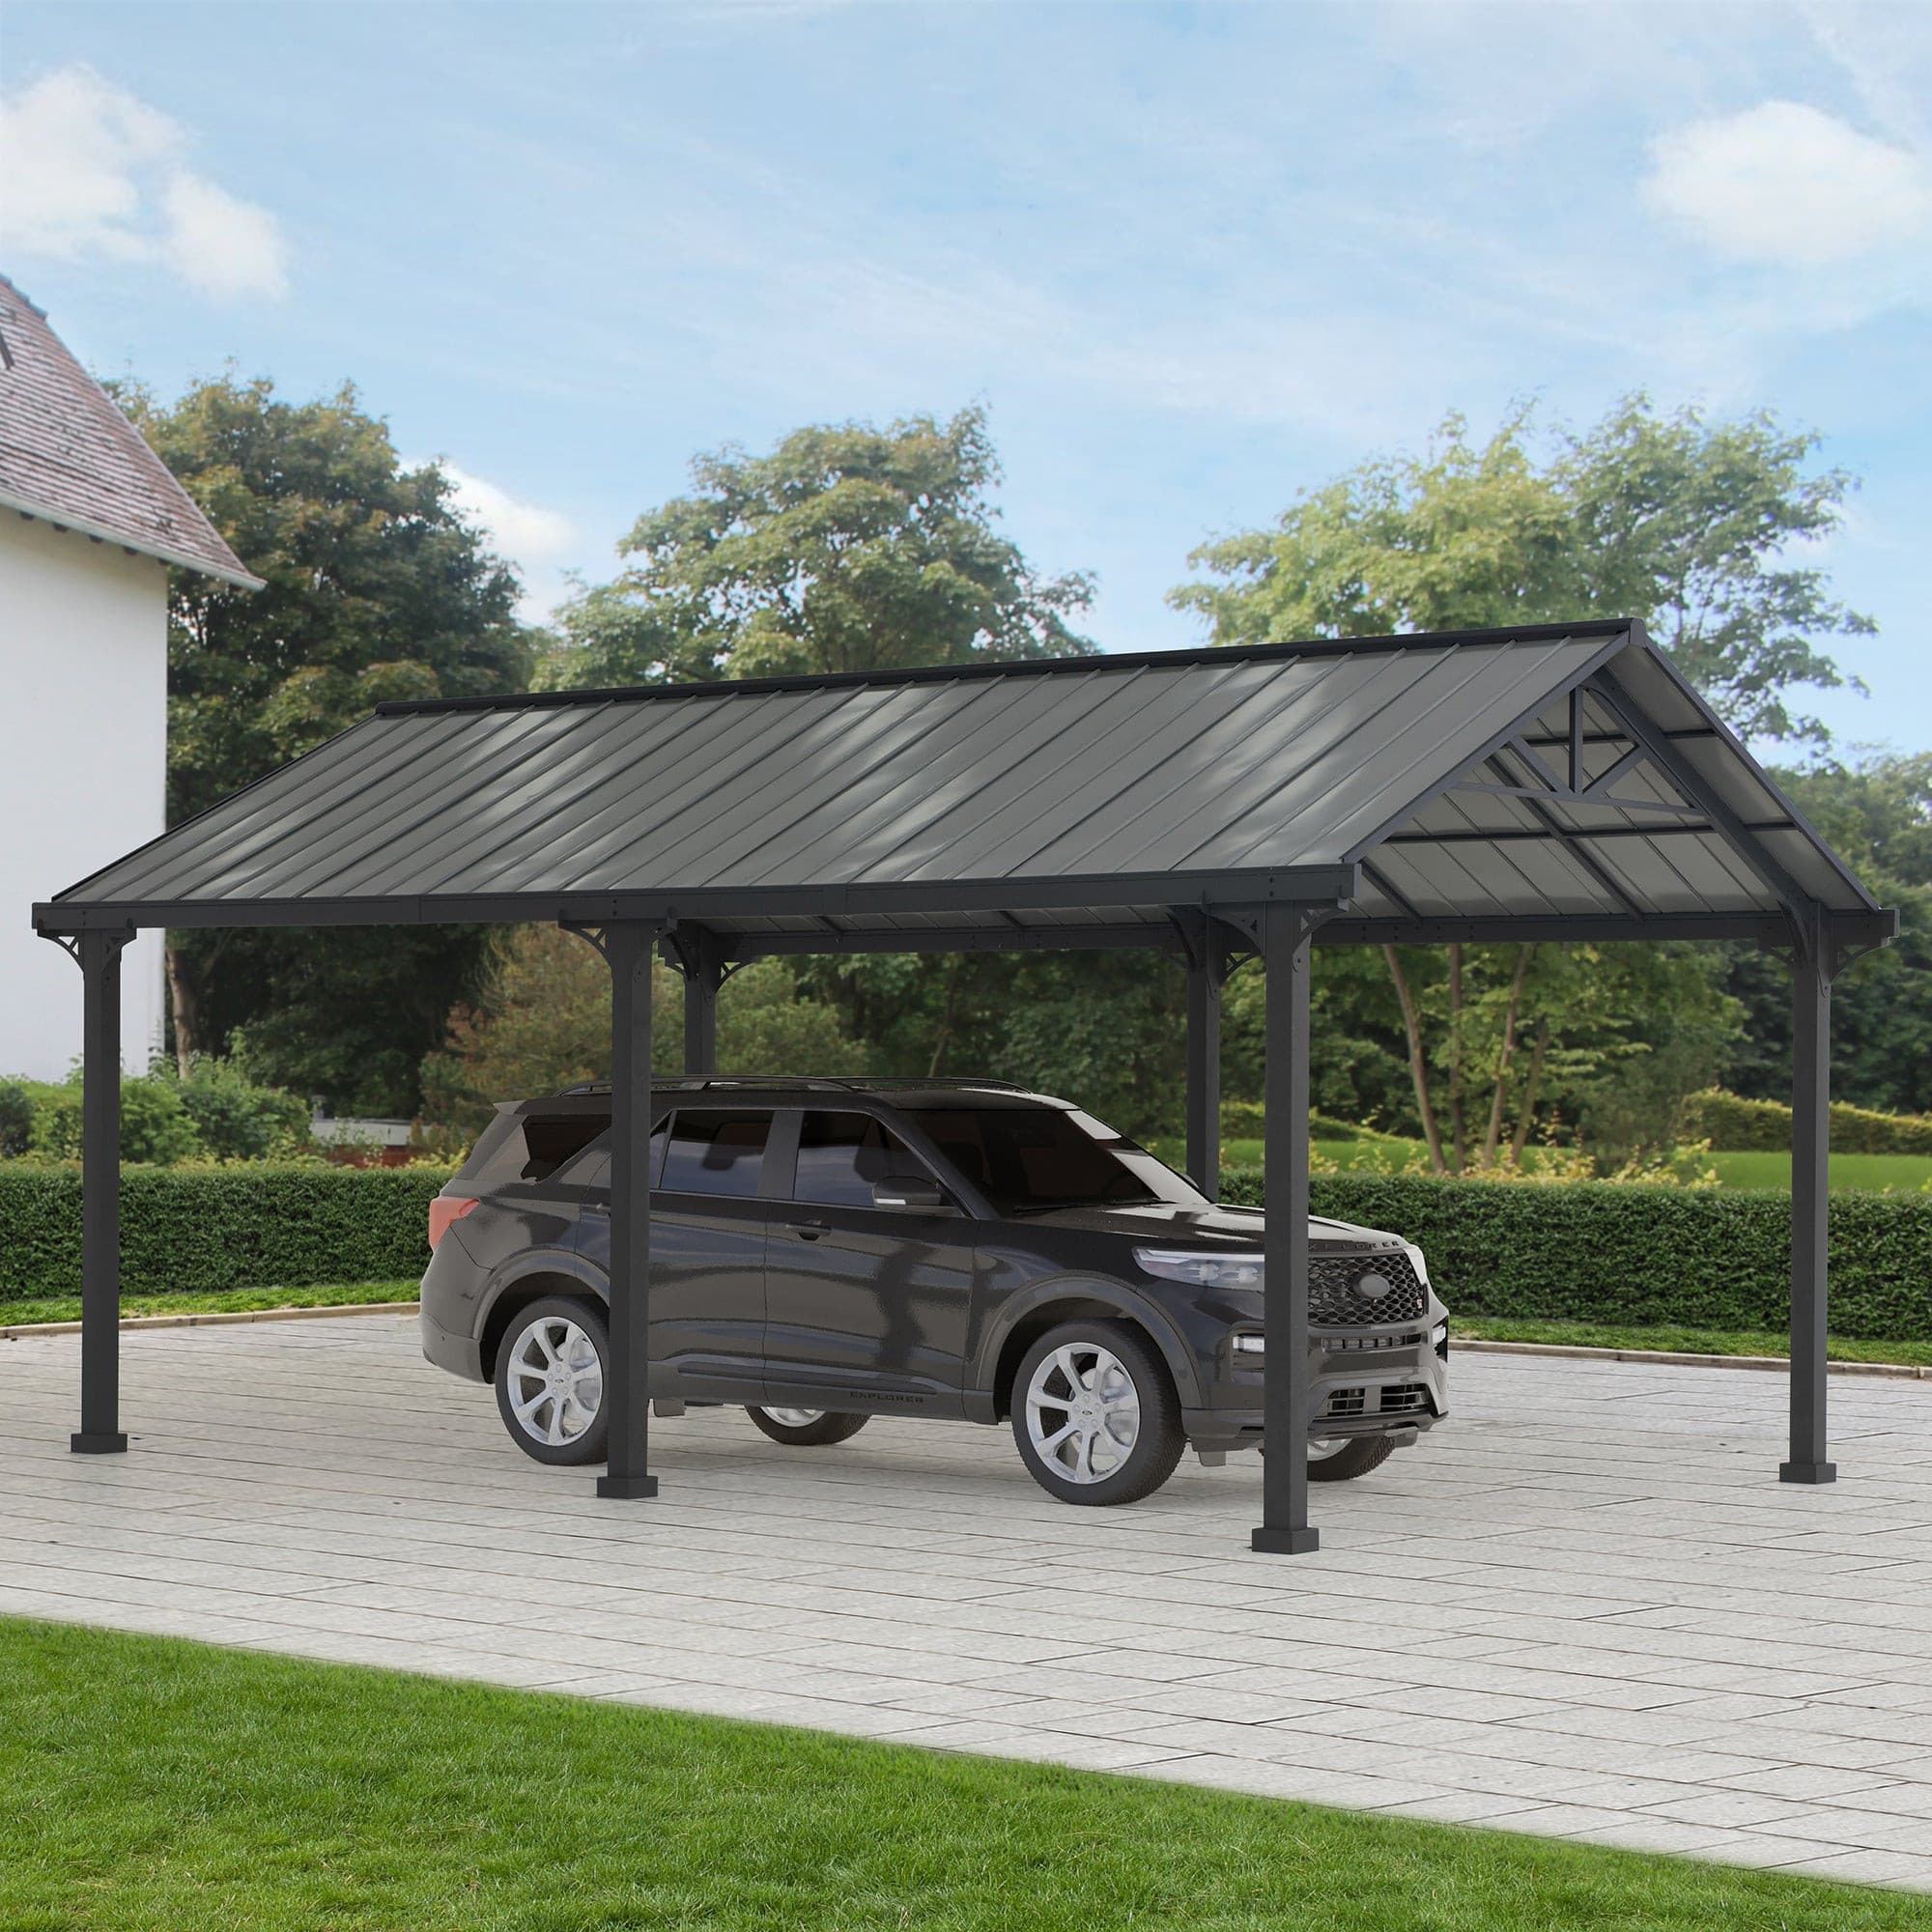 Sunjoy 12x20 Metal Carport, Black Steel Gable Roof Gazebo, Outdoor Living Pavilion with 2 Ceiling Hooks